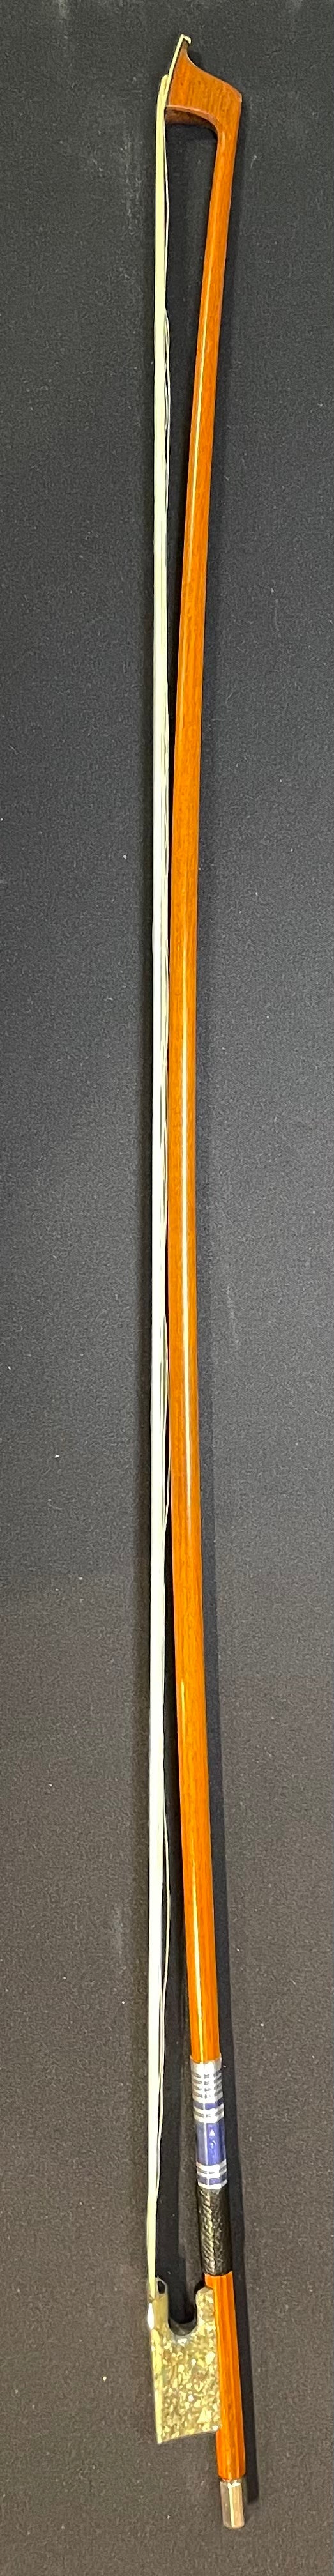 4/4 Violin Bow - TZXS Wood Model